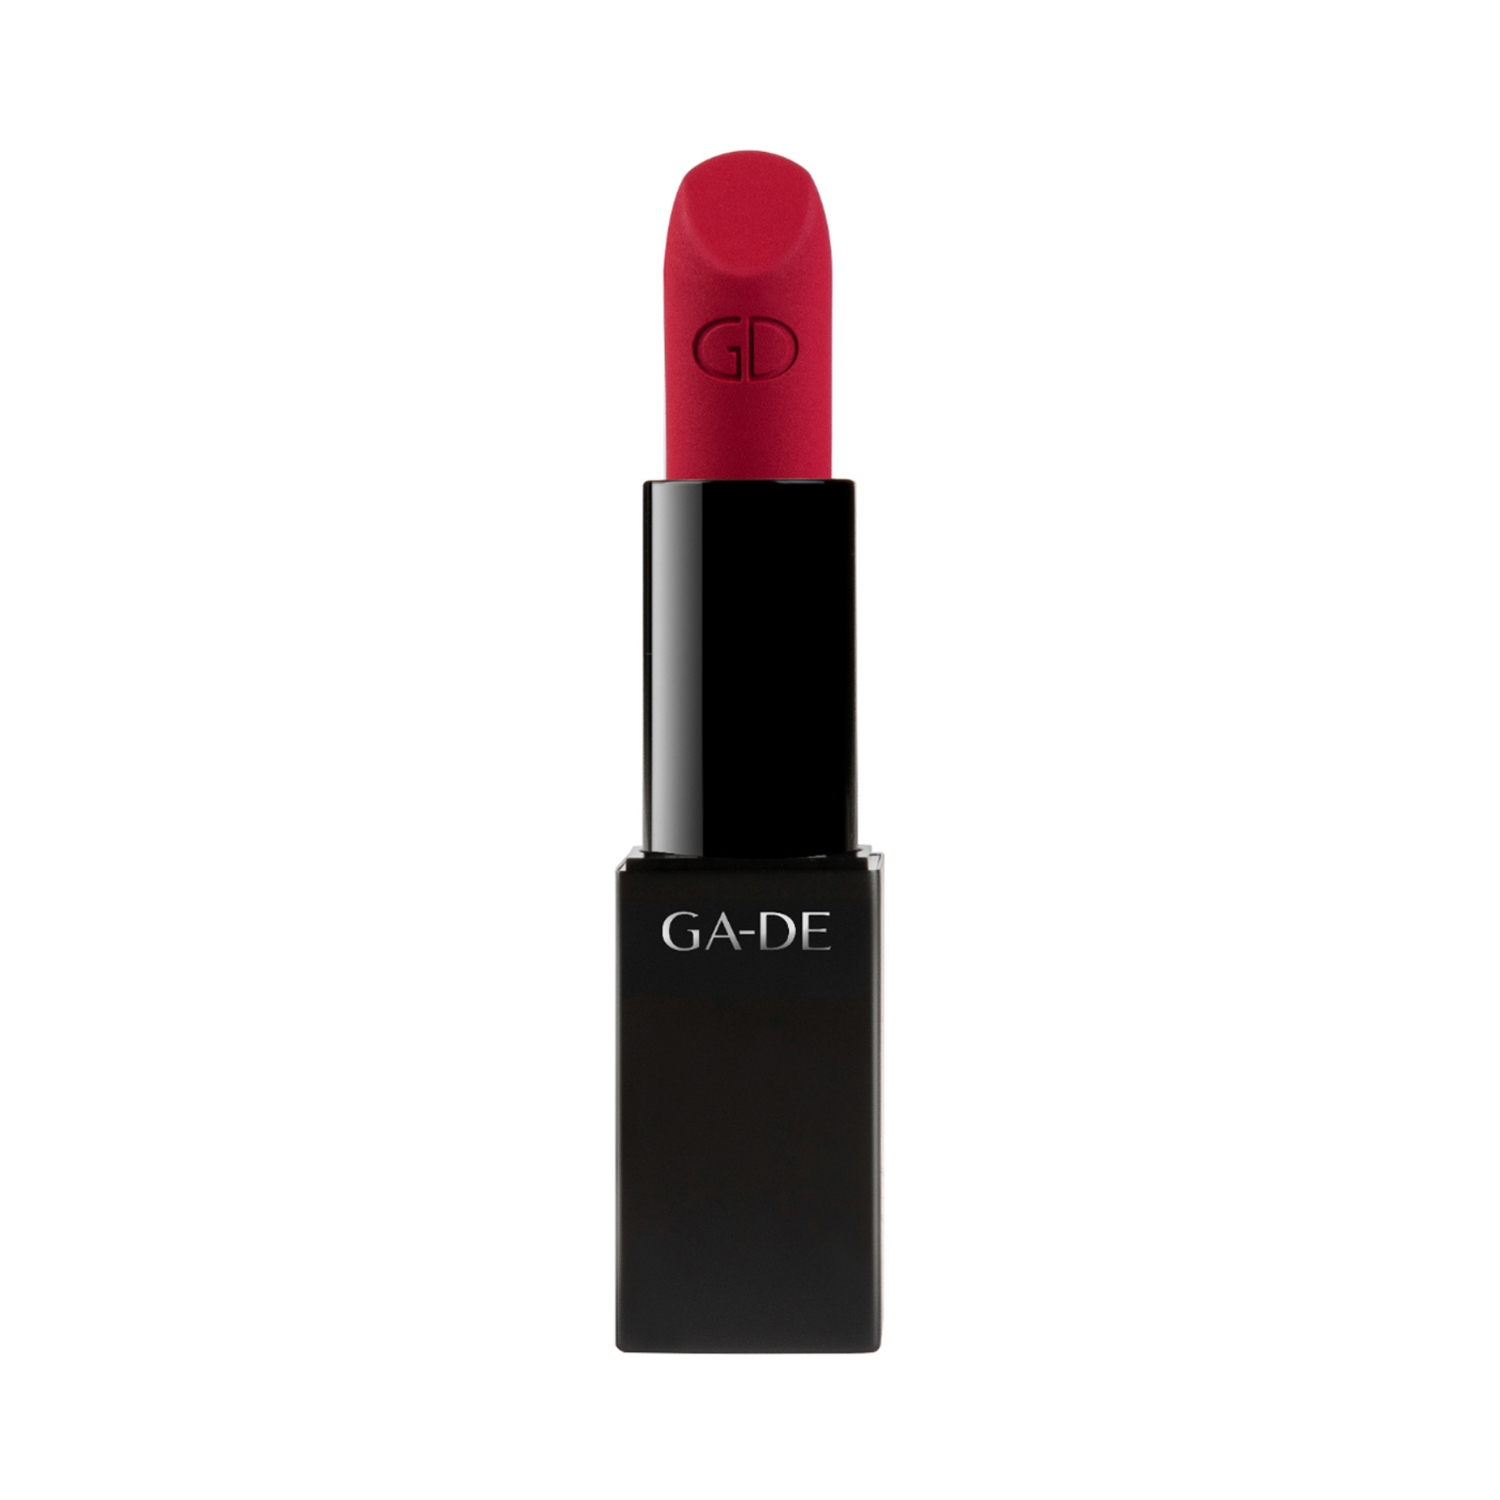 GA-DE | GA-DE Velveteen Pure Matte Lipstick - 758 Iconic Red (4g)